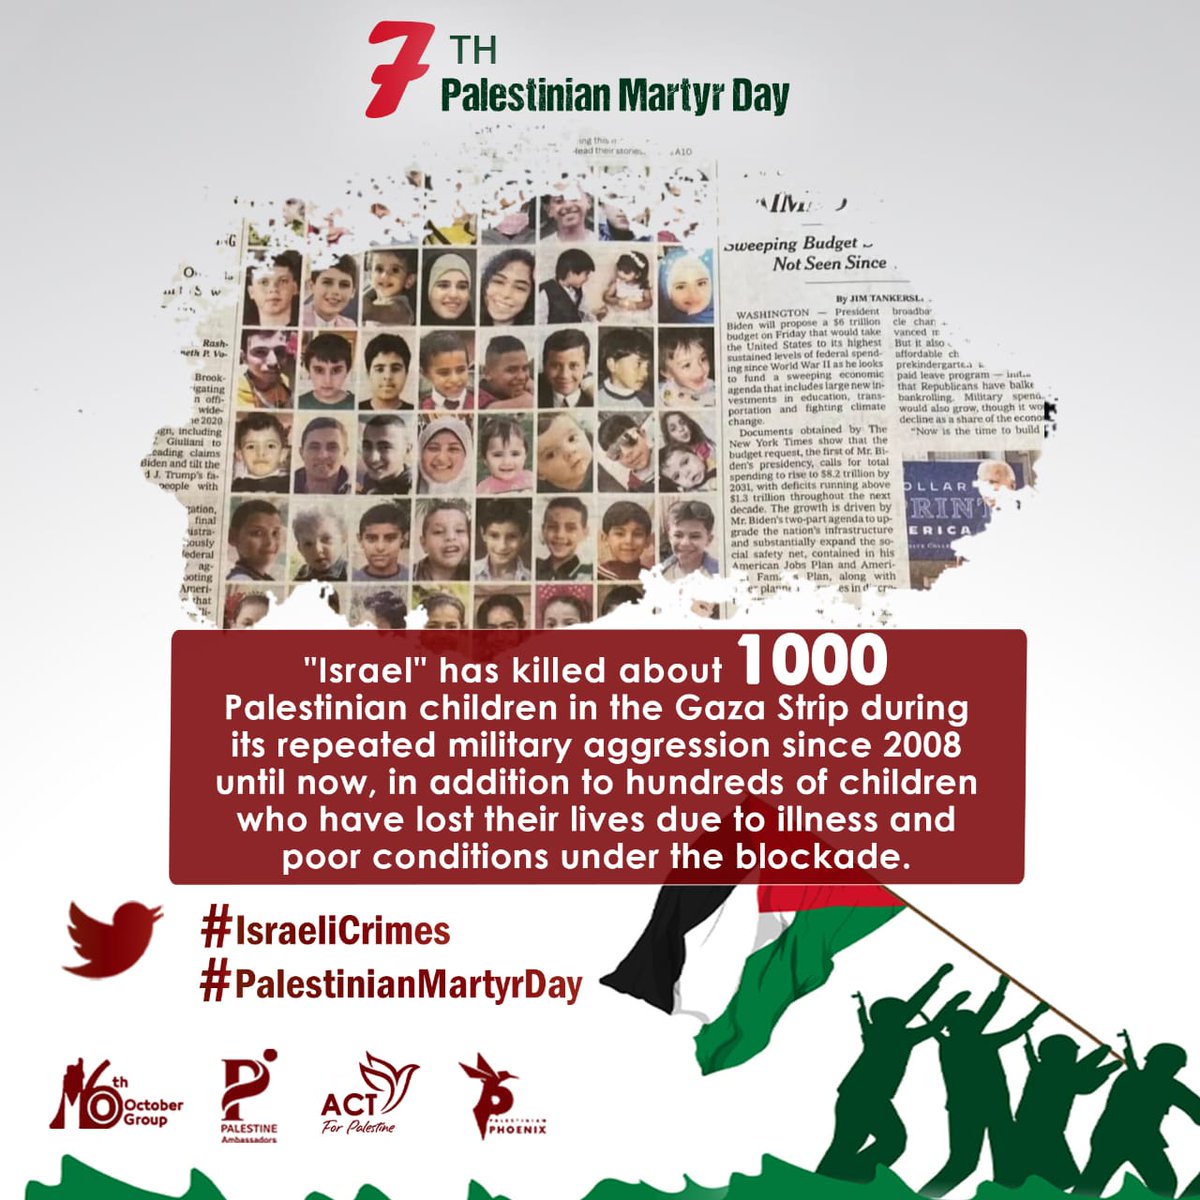 #PalestinianMartyrDay
#IsraeliCrimes
#16thOctoberGroup